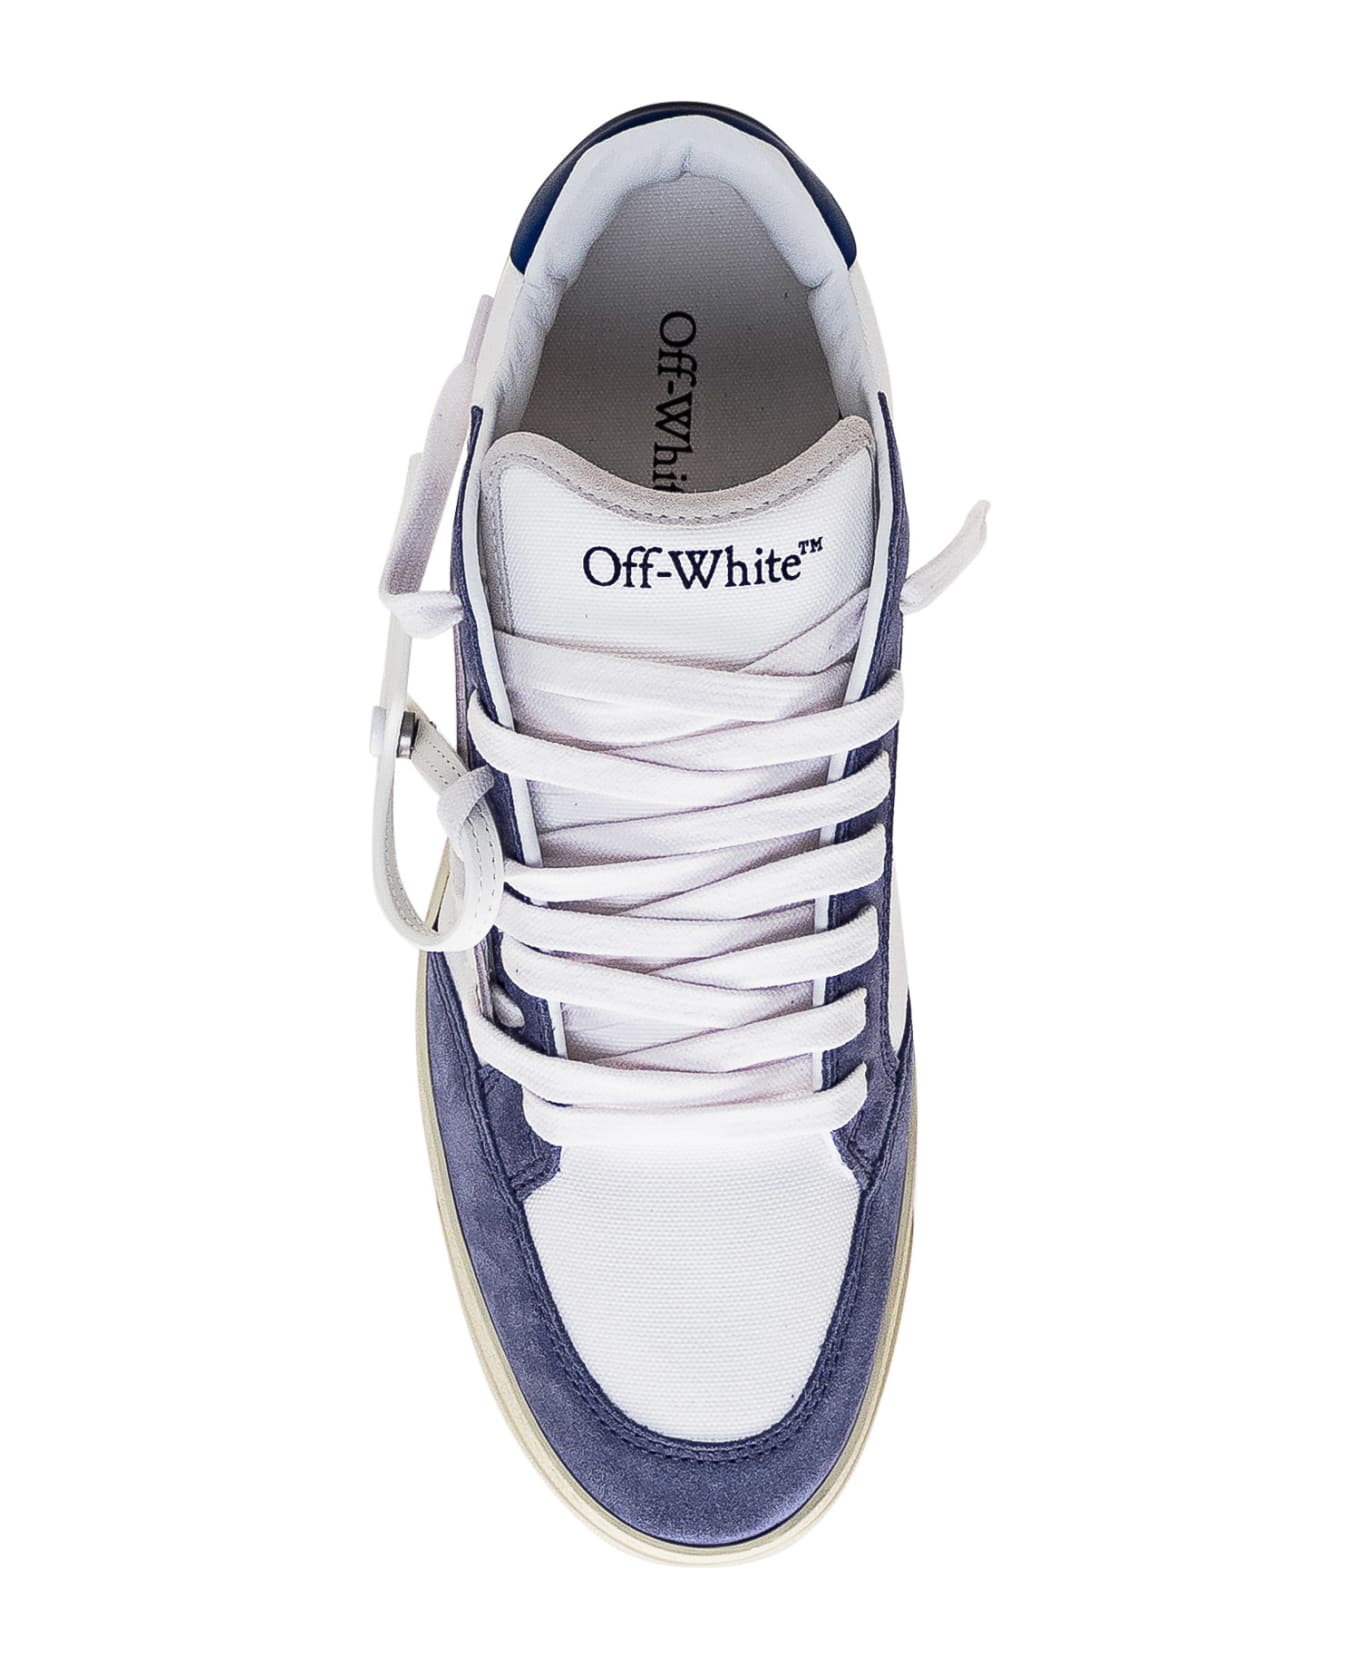 Off-White Sneakers 5.0 - White スニーカー